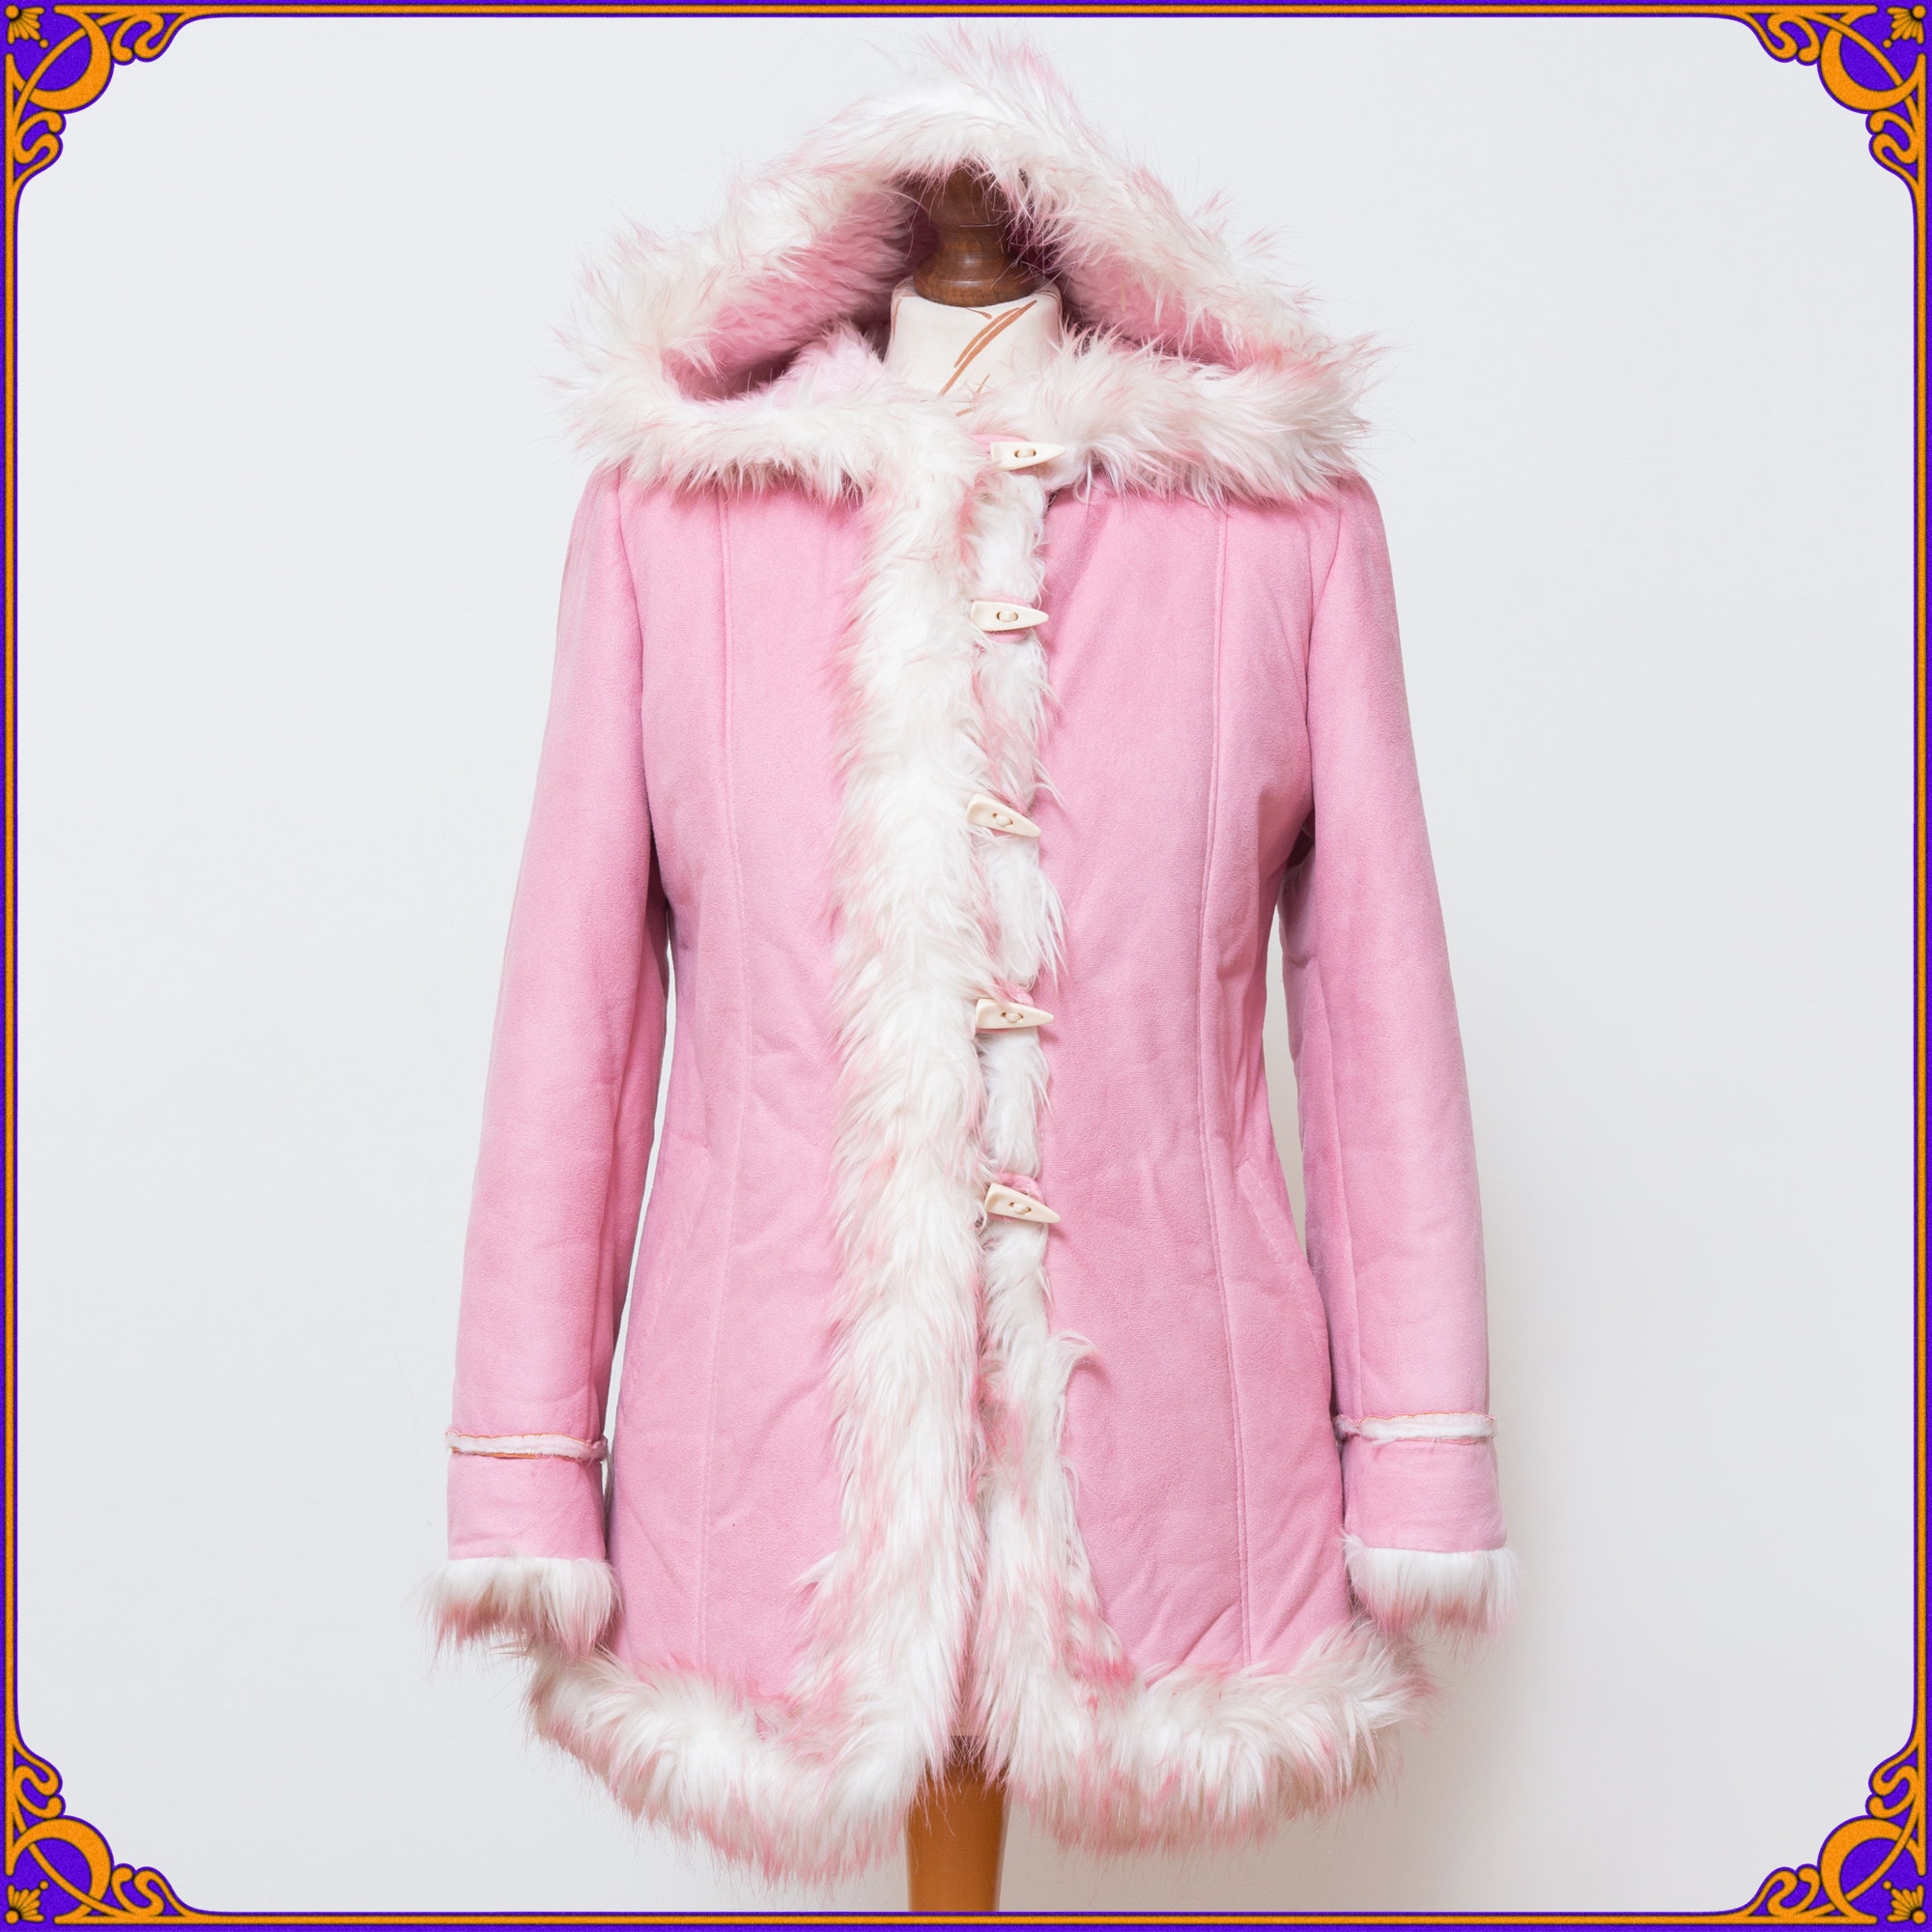 Cute 70s Inspired Pink Faux Suede & Vegan Fur Jacket With Hood